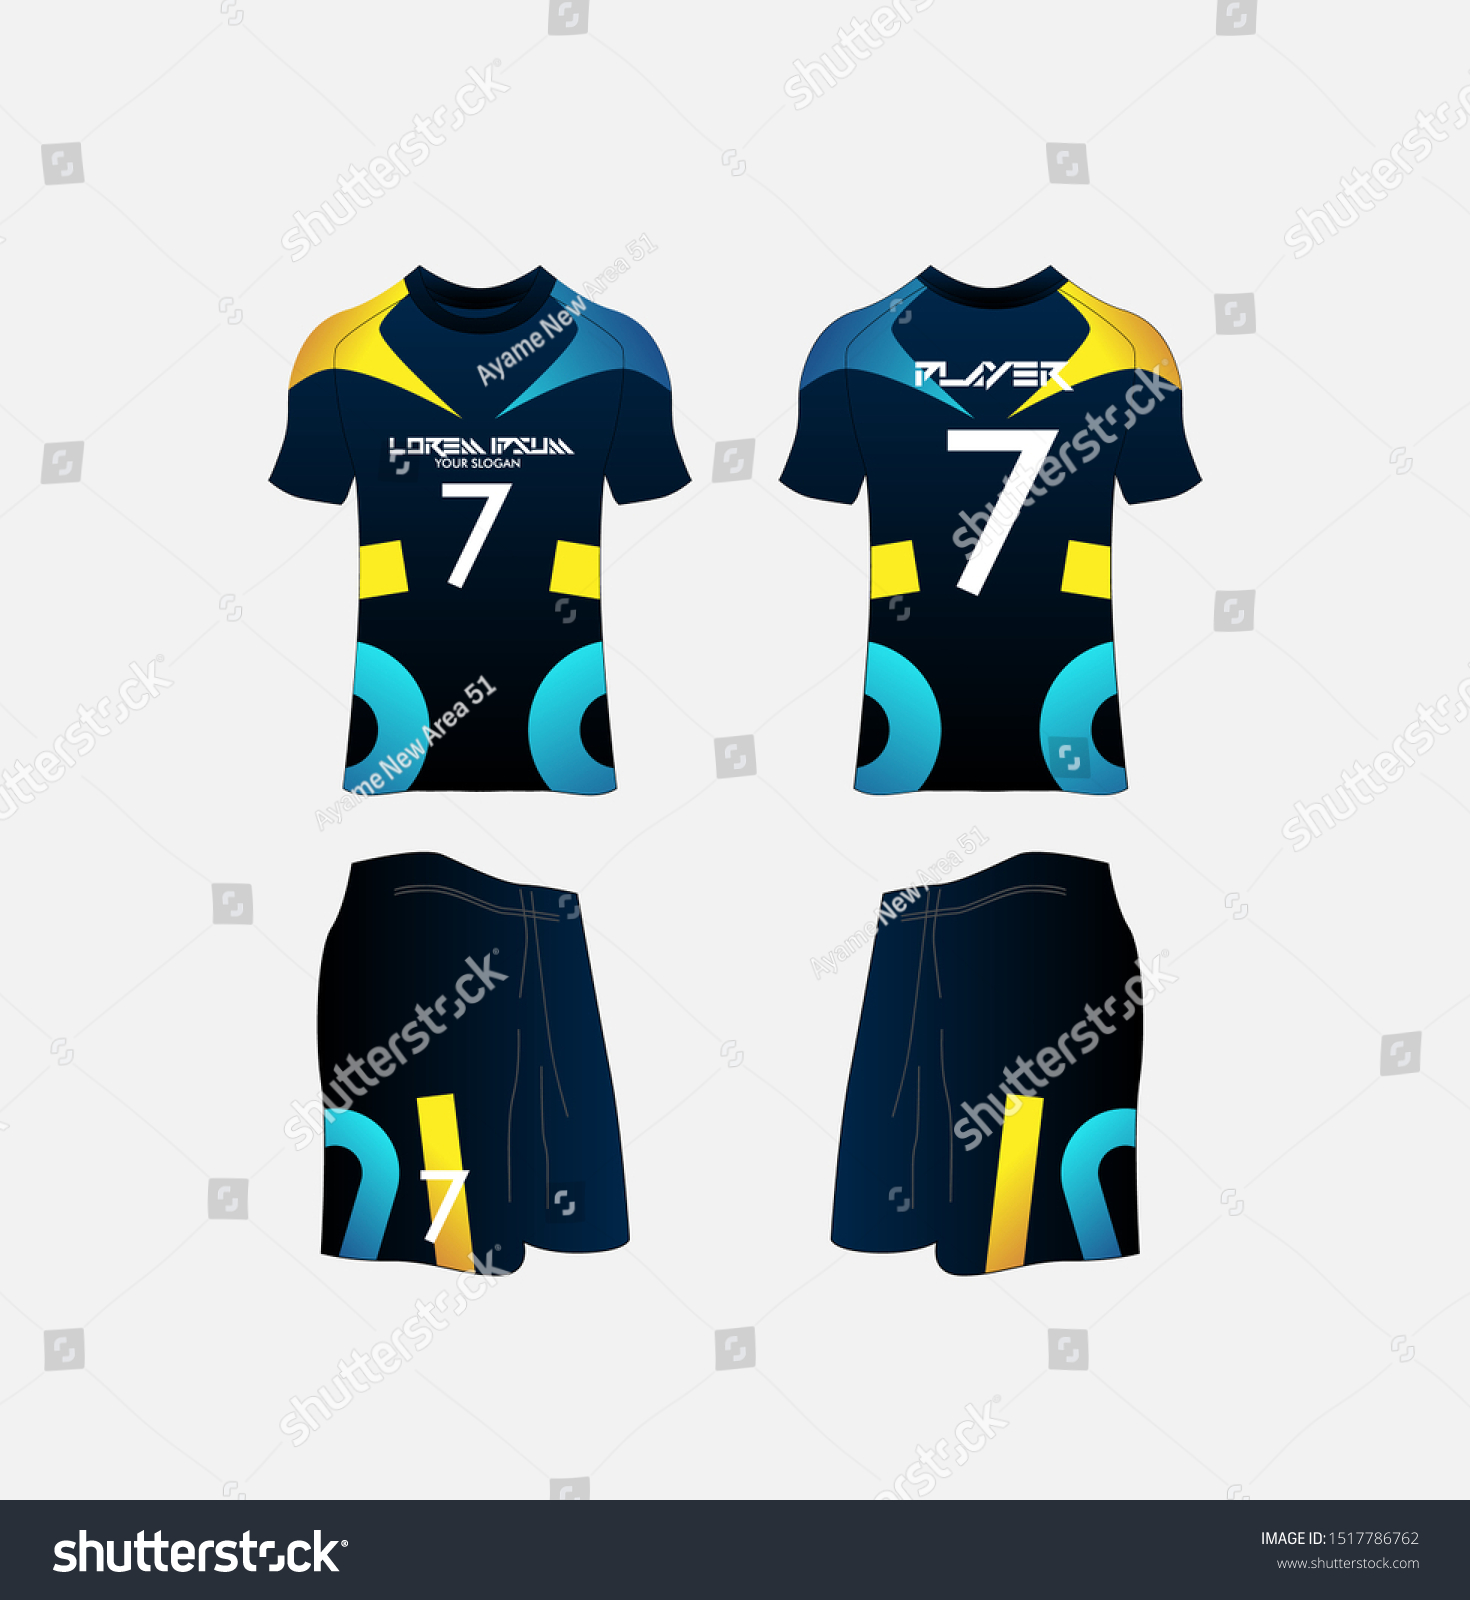 Download Tshirt Sport Design Templatevolleyball Soccer Football Stock Vector Royalty Free 1517786762